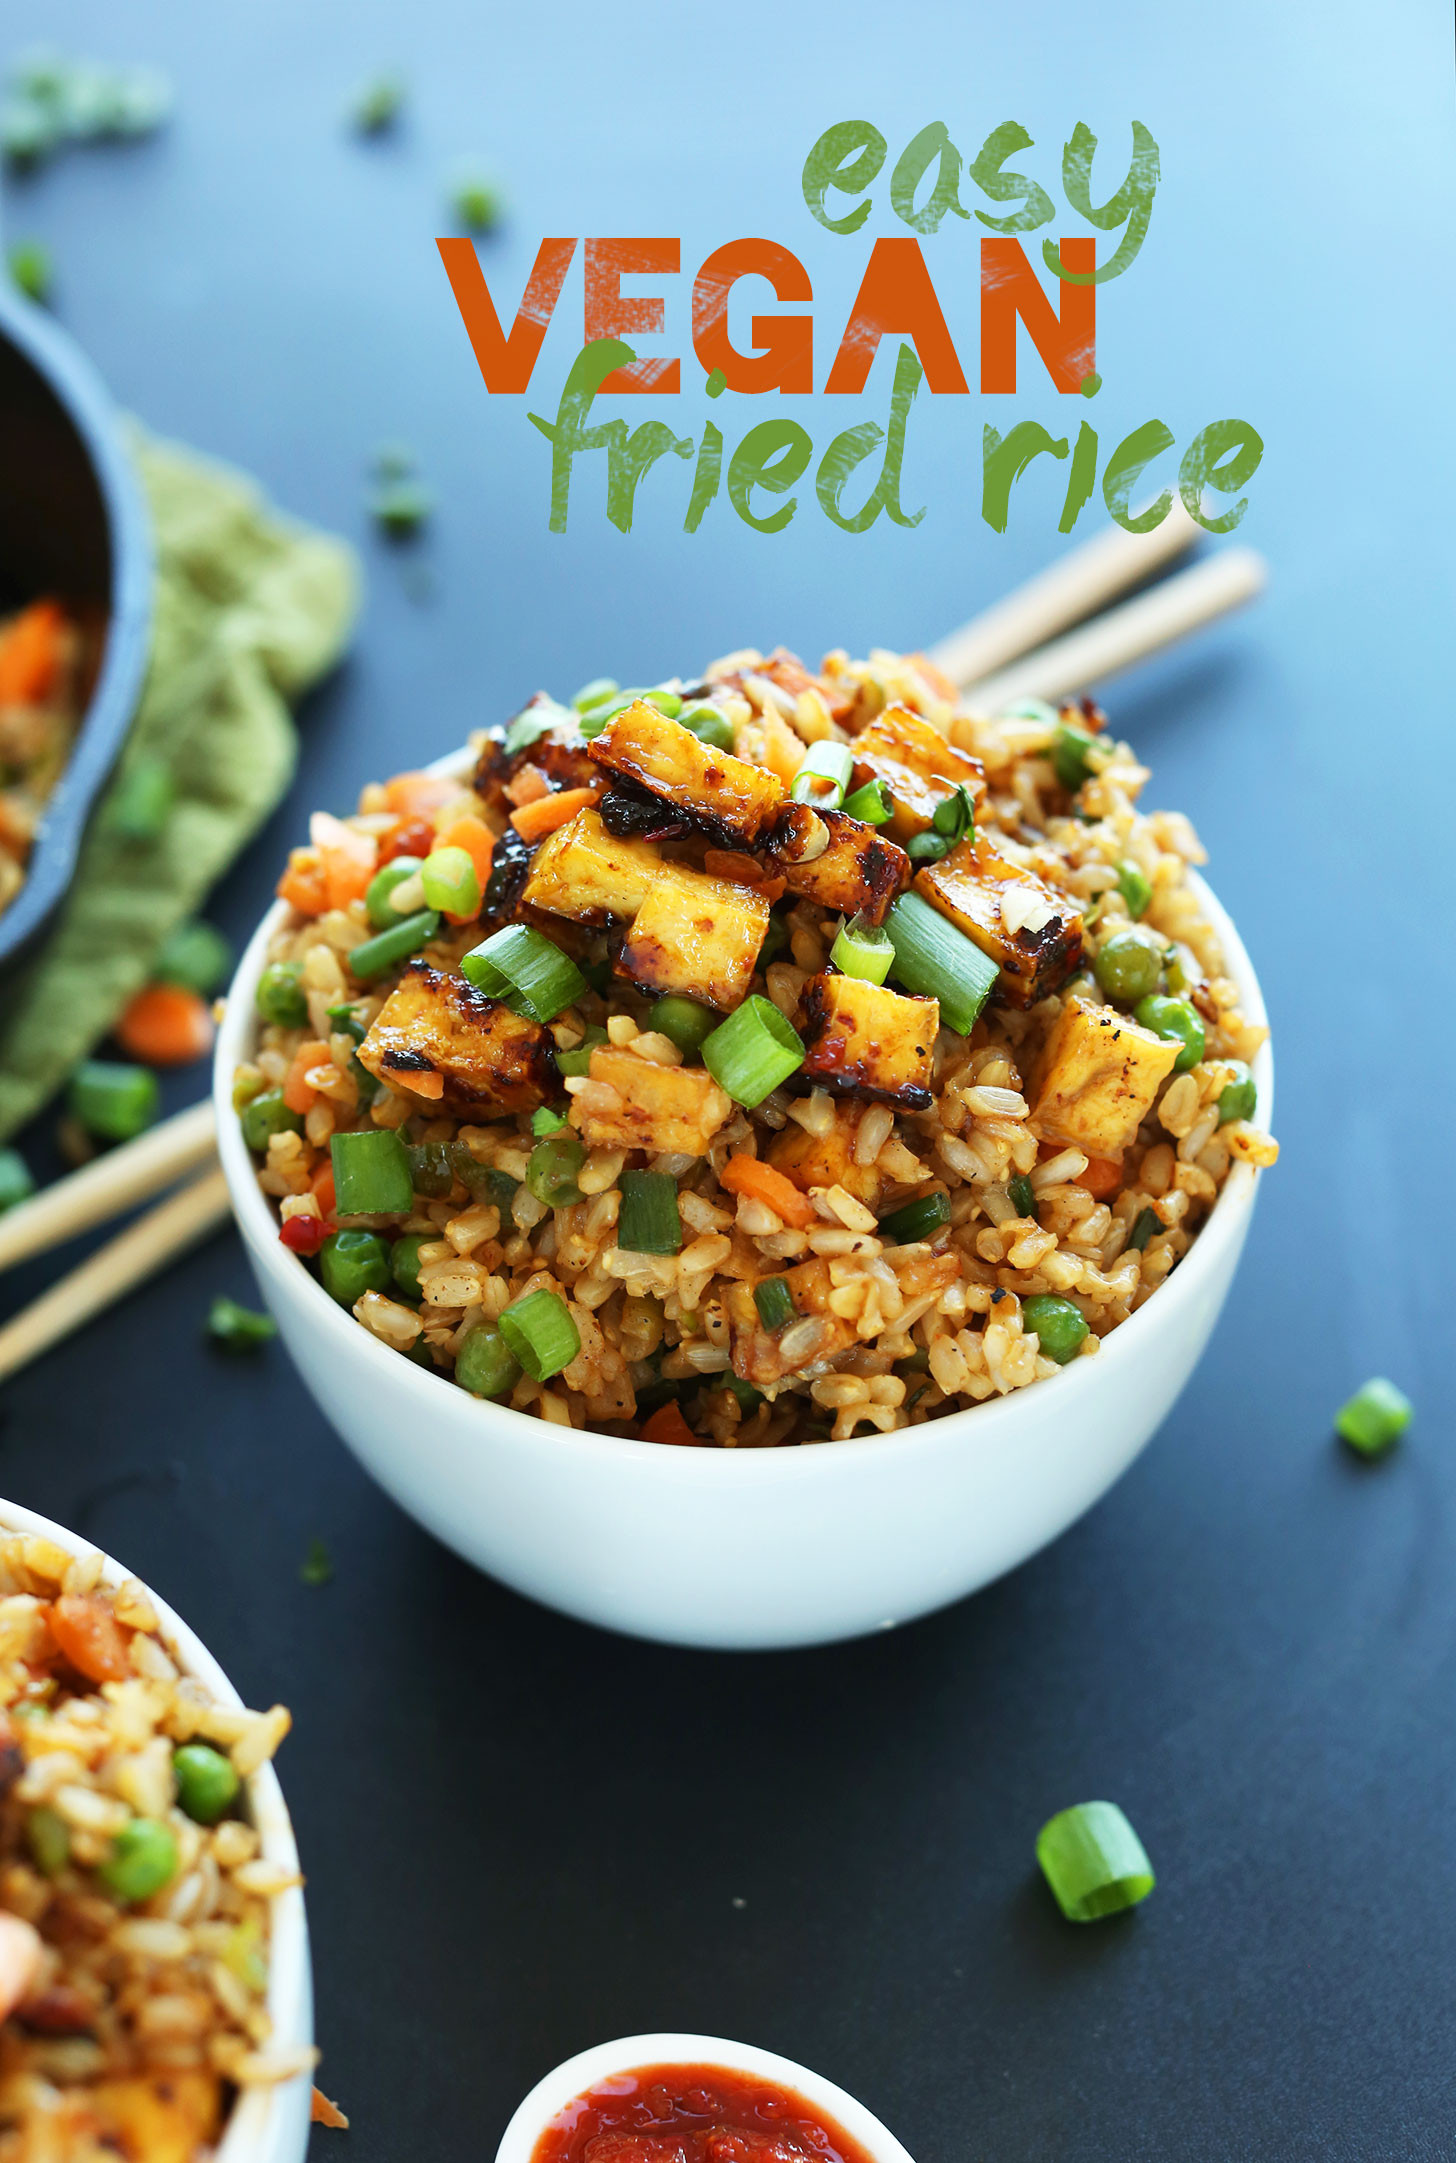 Vegetarian Recipes With Rice
 Vegan Fried Rice